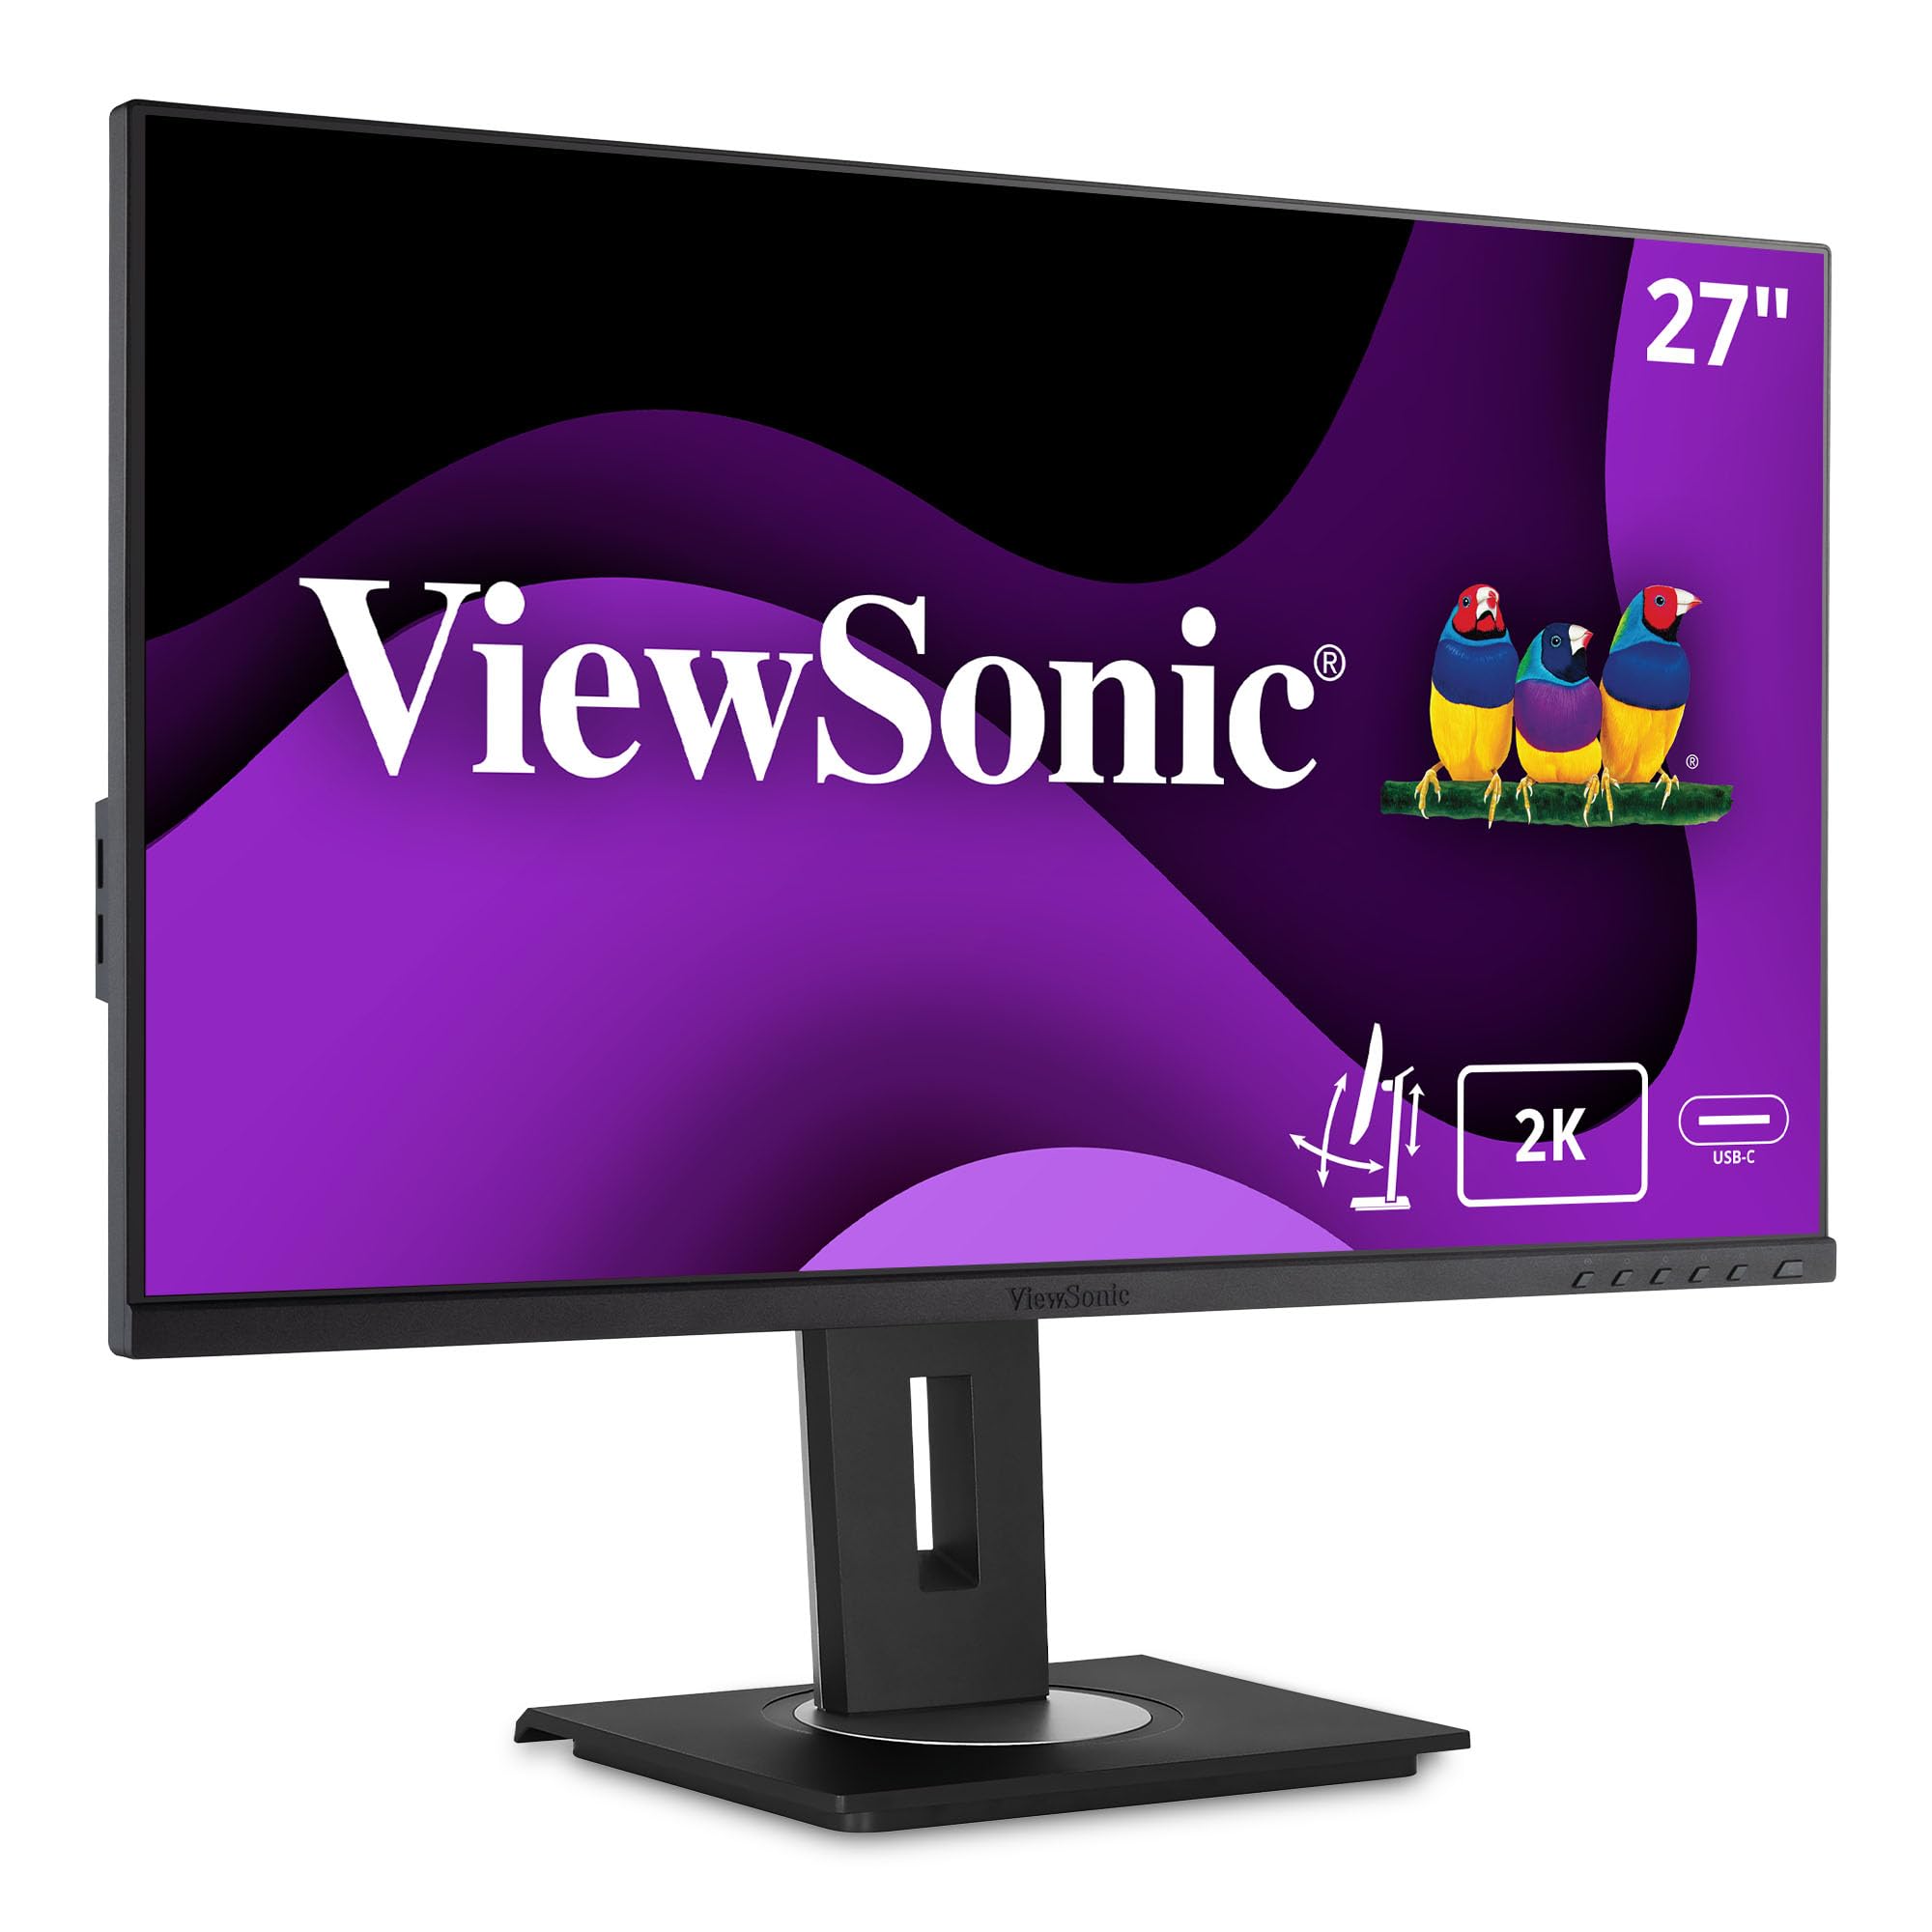 Viewsonic VG2755-2K 68,6 cm (27 Zoll) Büro Monitor (WQHD, IPS-Panel, HDMI, DP, USB 3.0 Hub, USB C, Höhenverstellbar, Lautsprecher, Eye-Care, 4 Jahre Austauschservice) Schwarz